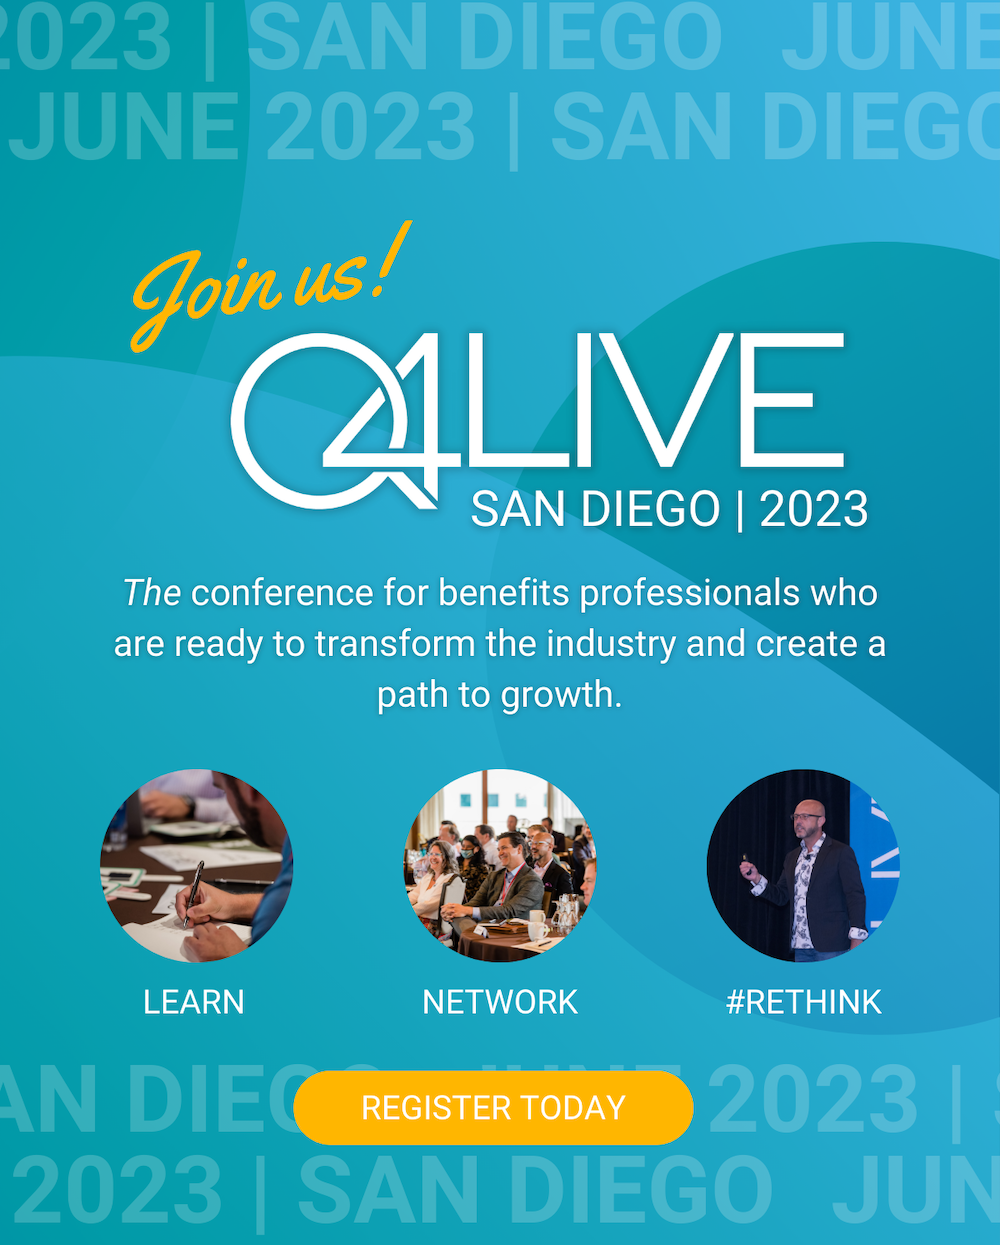 Register for Q4Live San Diego 2023